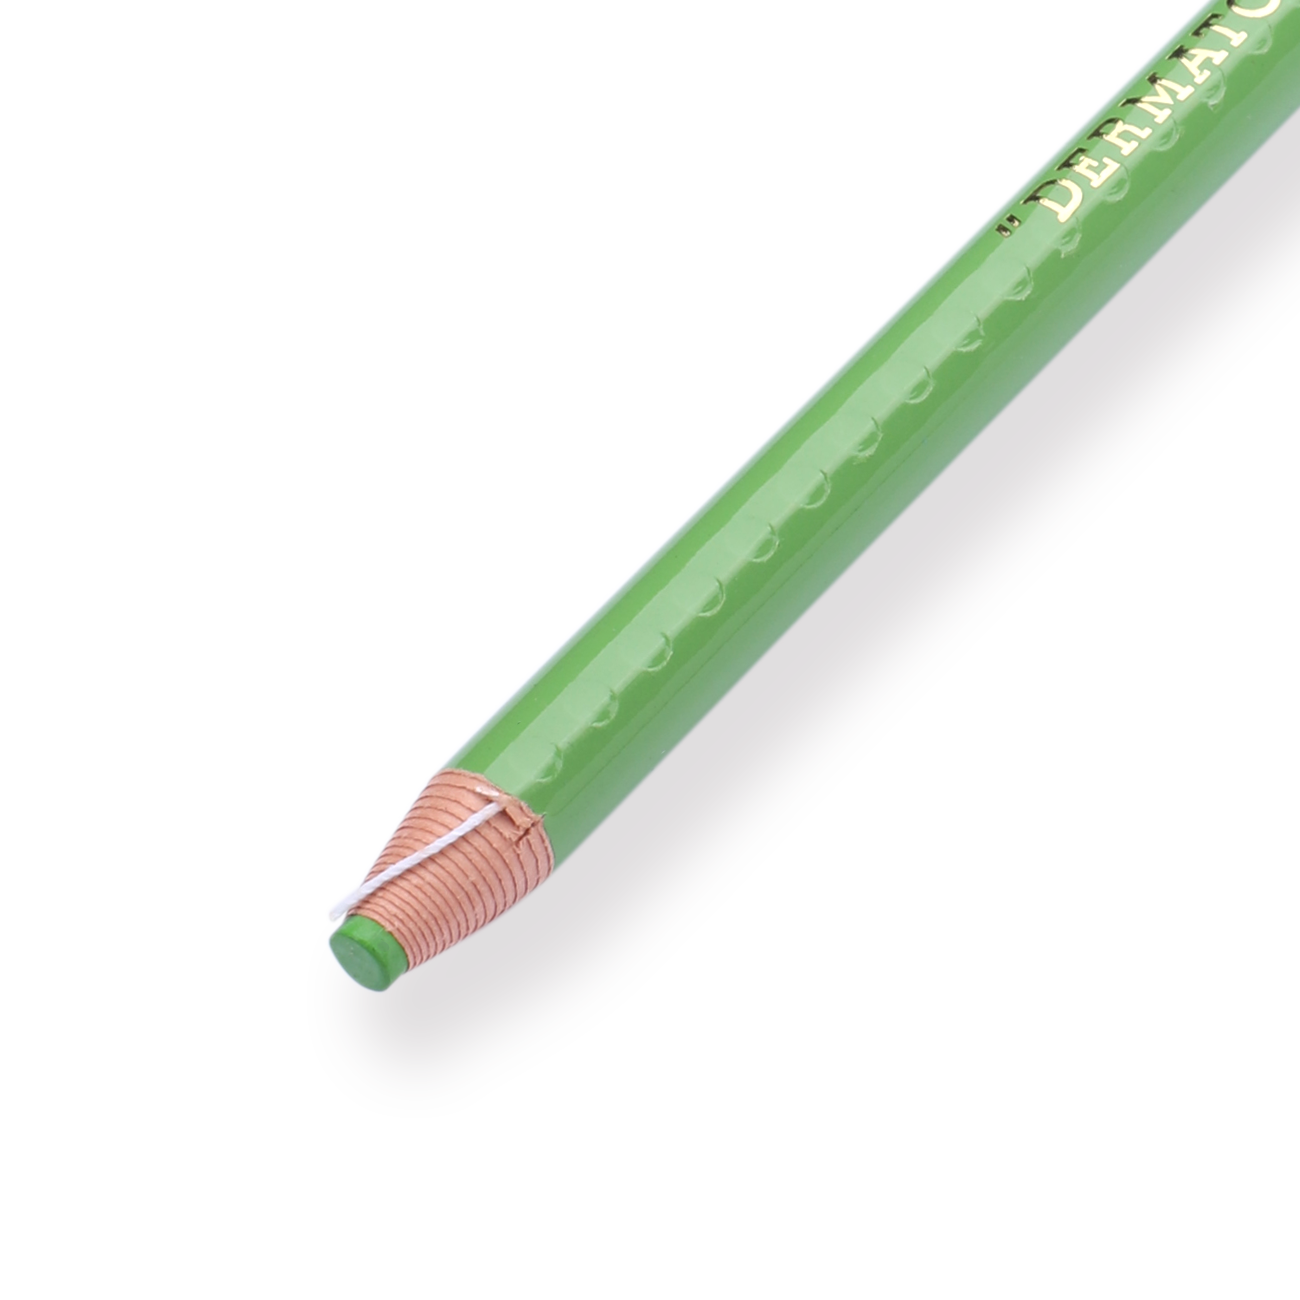 Uni-ball Dermatograph 7600 Colored Pencil - Light Green - Stationery Pal